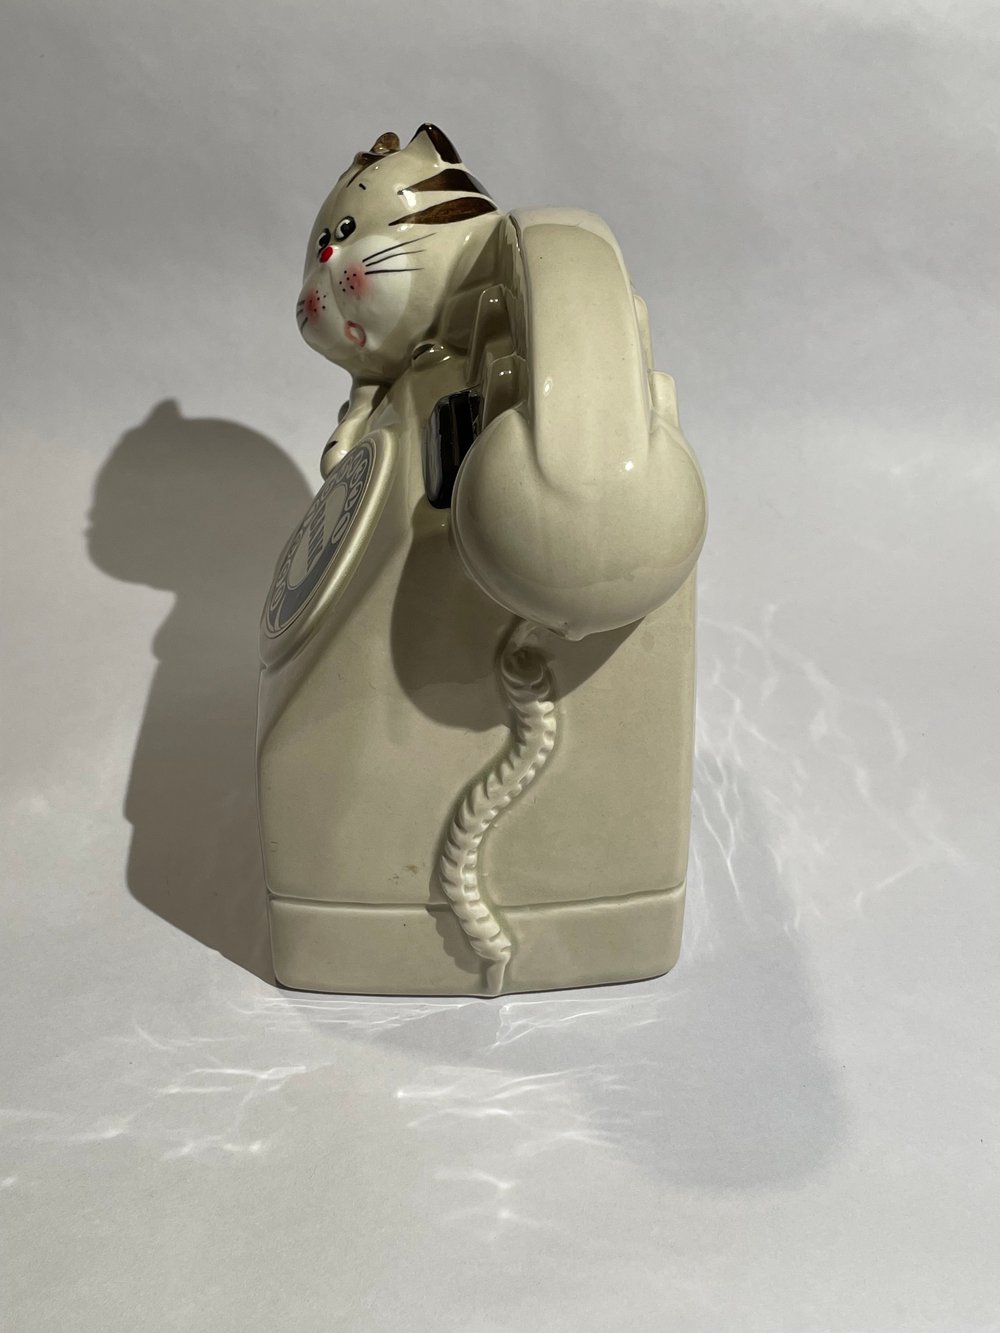 Image of Retro Telephone Climbing Cats Bank  